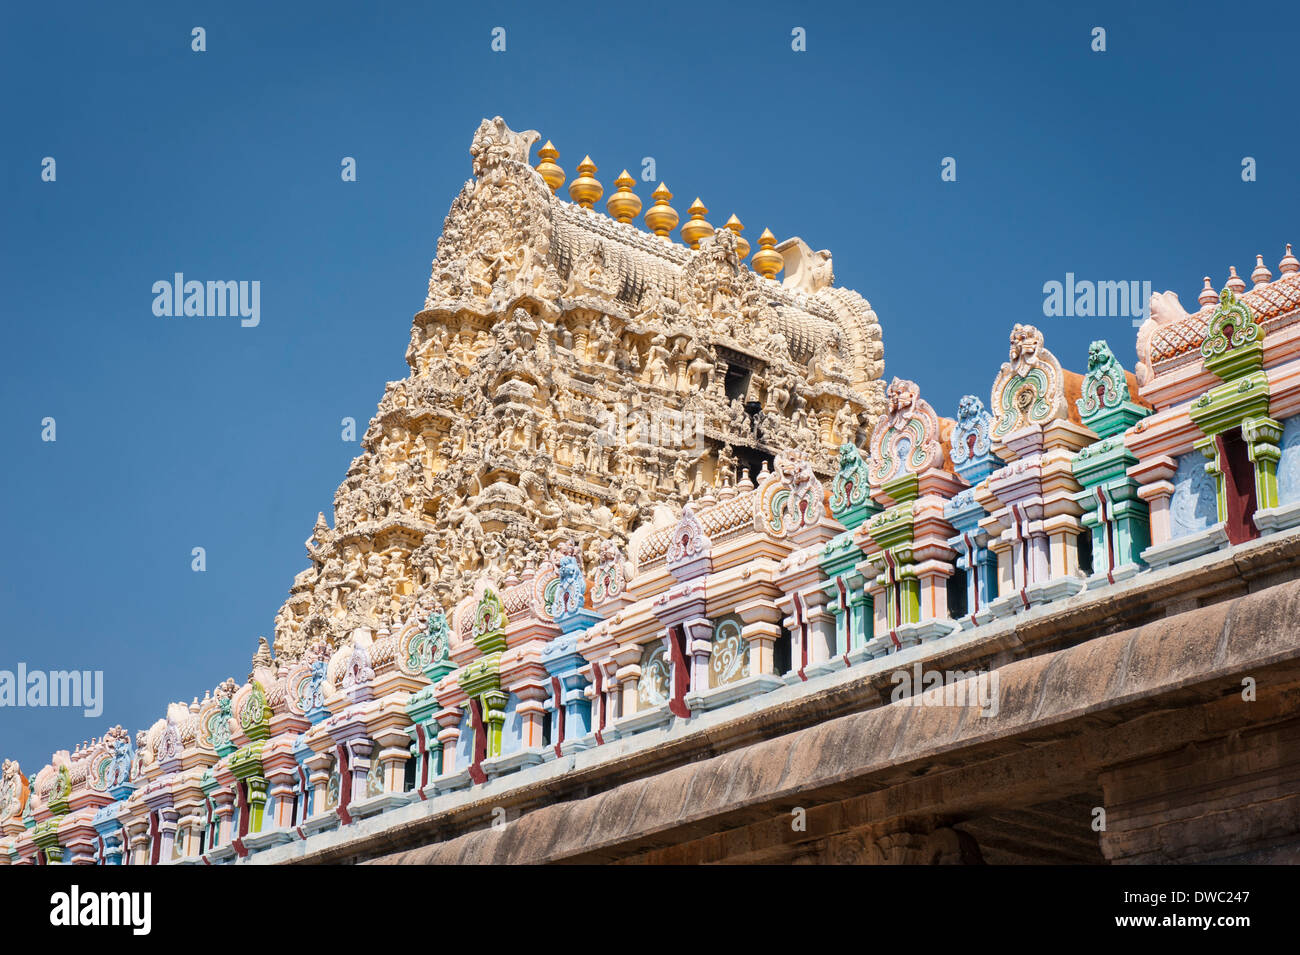 Indien Tamil Nadu Kanchipuram Sri Ekambaranathar Ekambareswarar Tempel Tempel Shiva Hindu 6. Jahrhundert Turm Dach details Turm Statuen Skulpturen Stockfoto